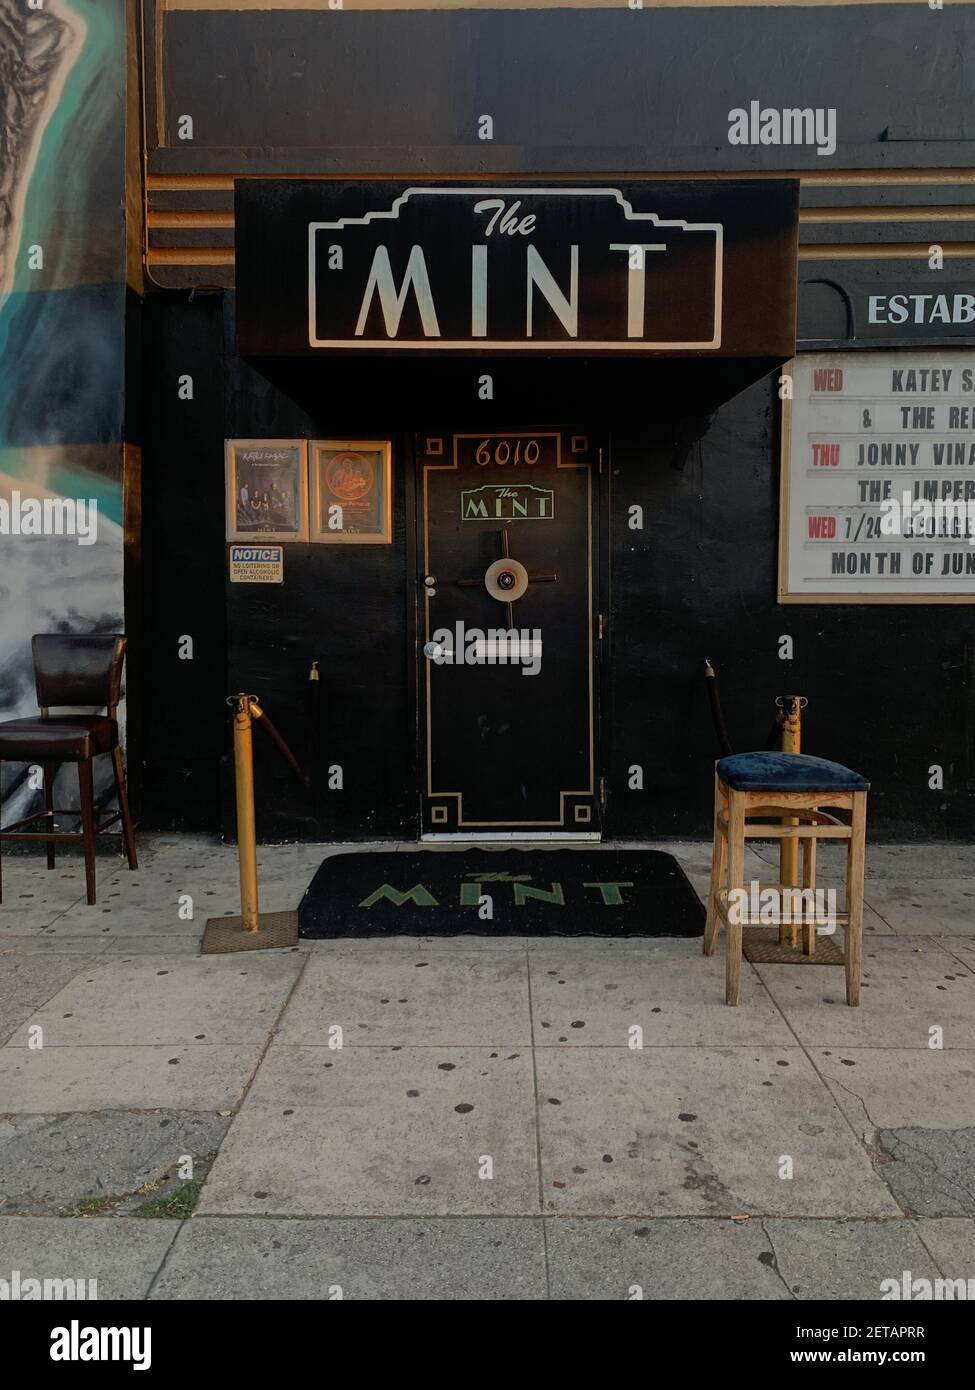 WEST PALM BEACH, STATI UNITI - 28 Giugno 2019: The Mint bar and lounge a Los Angeles, California USA. Foto Stock